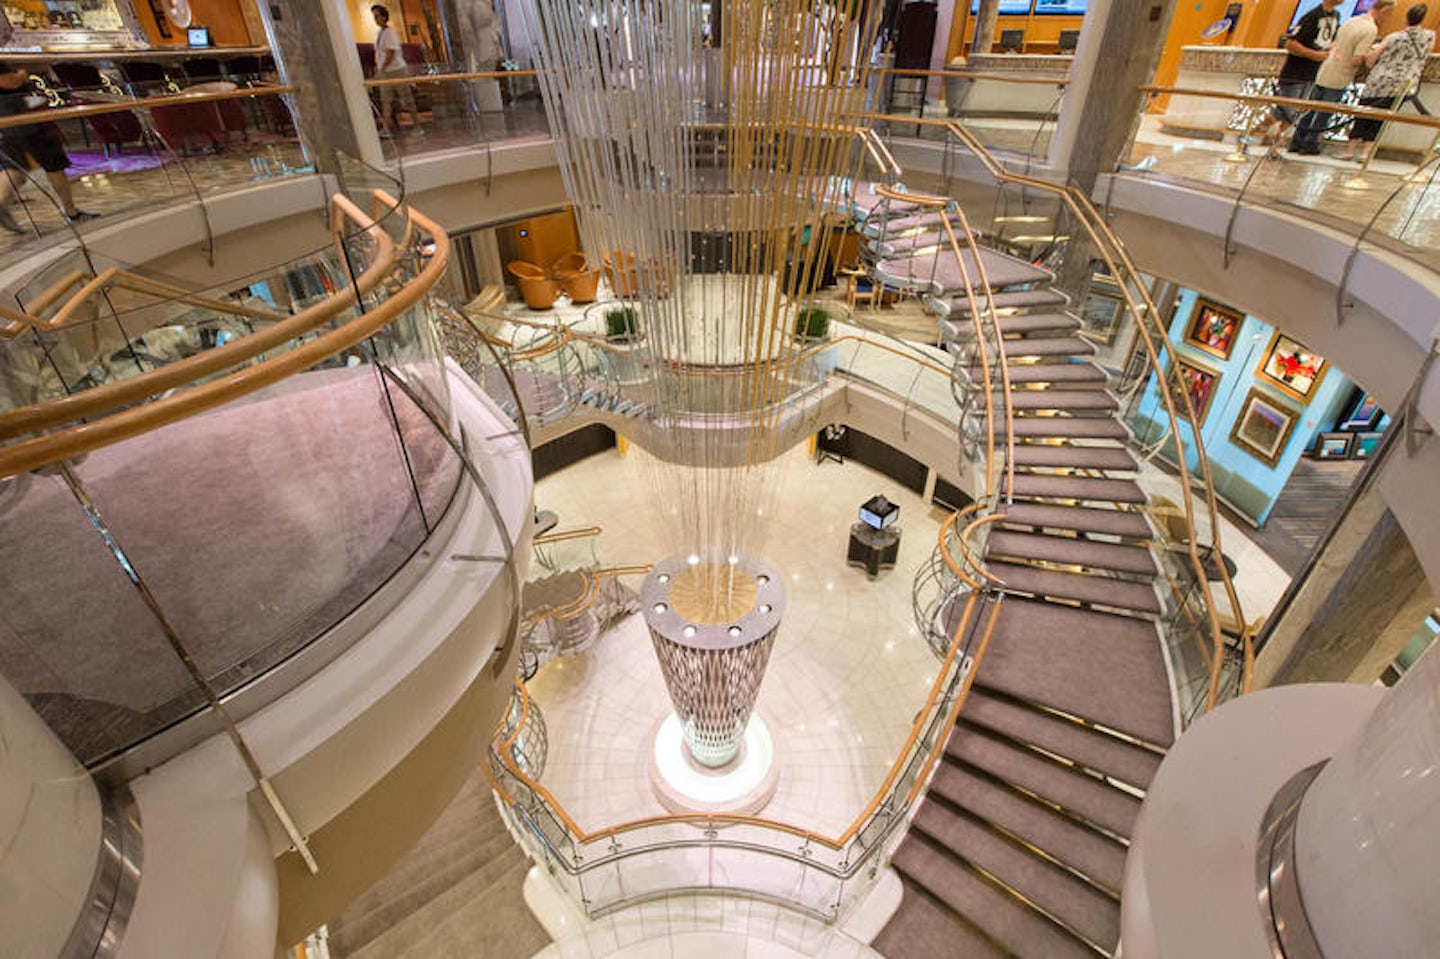 The Centrum Atrium on Voyager of the Seas